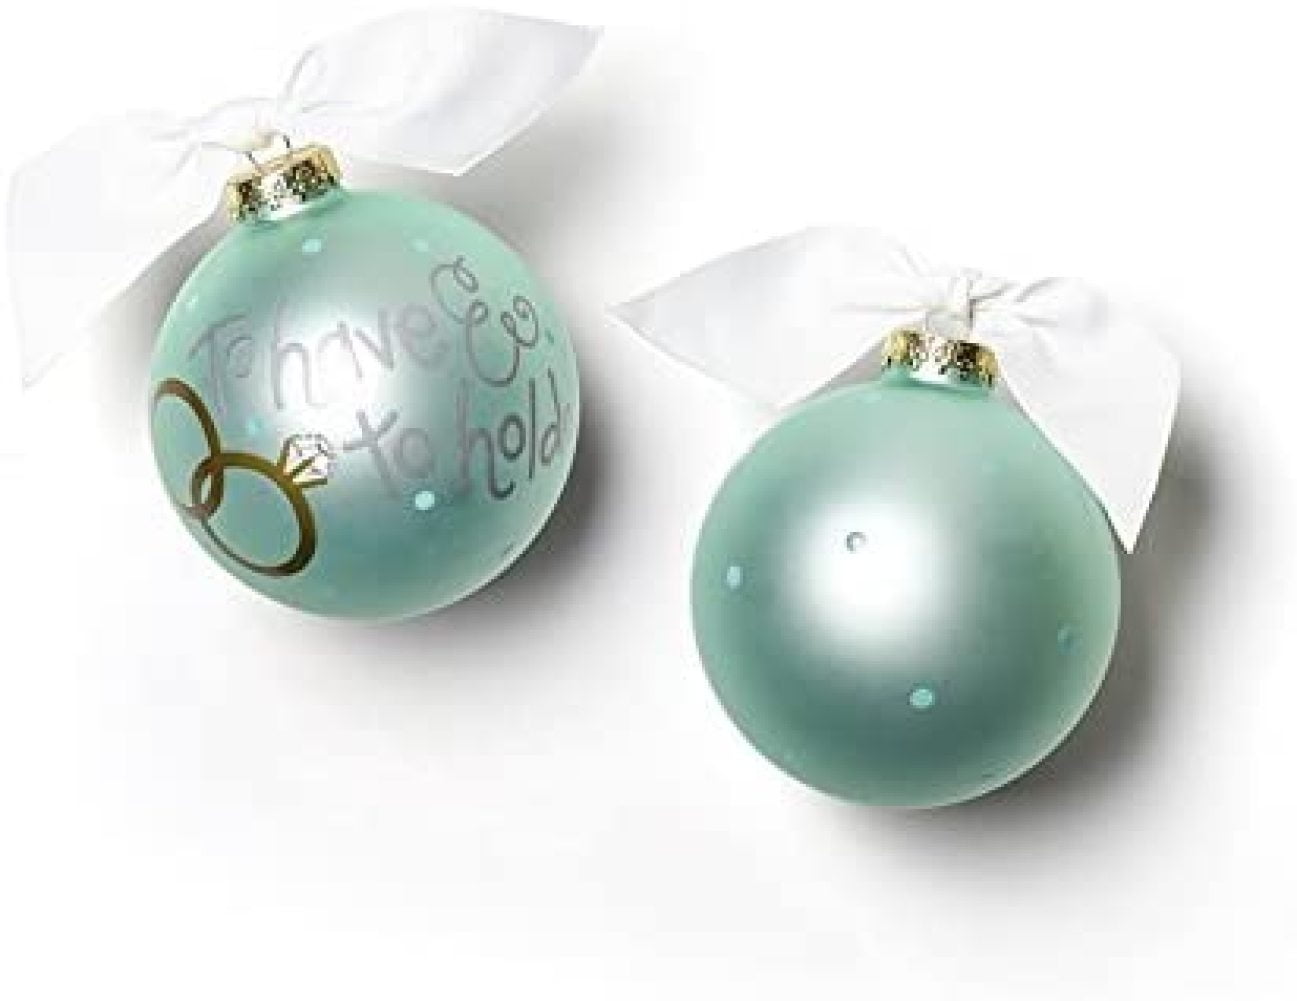 Chiropractor Glass Ball Christmas Ornament 